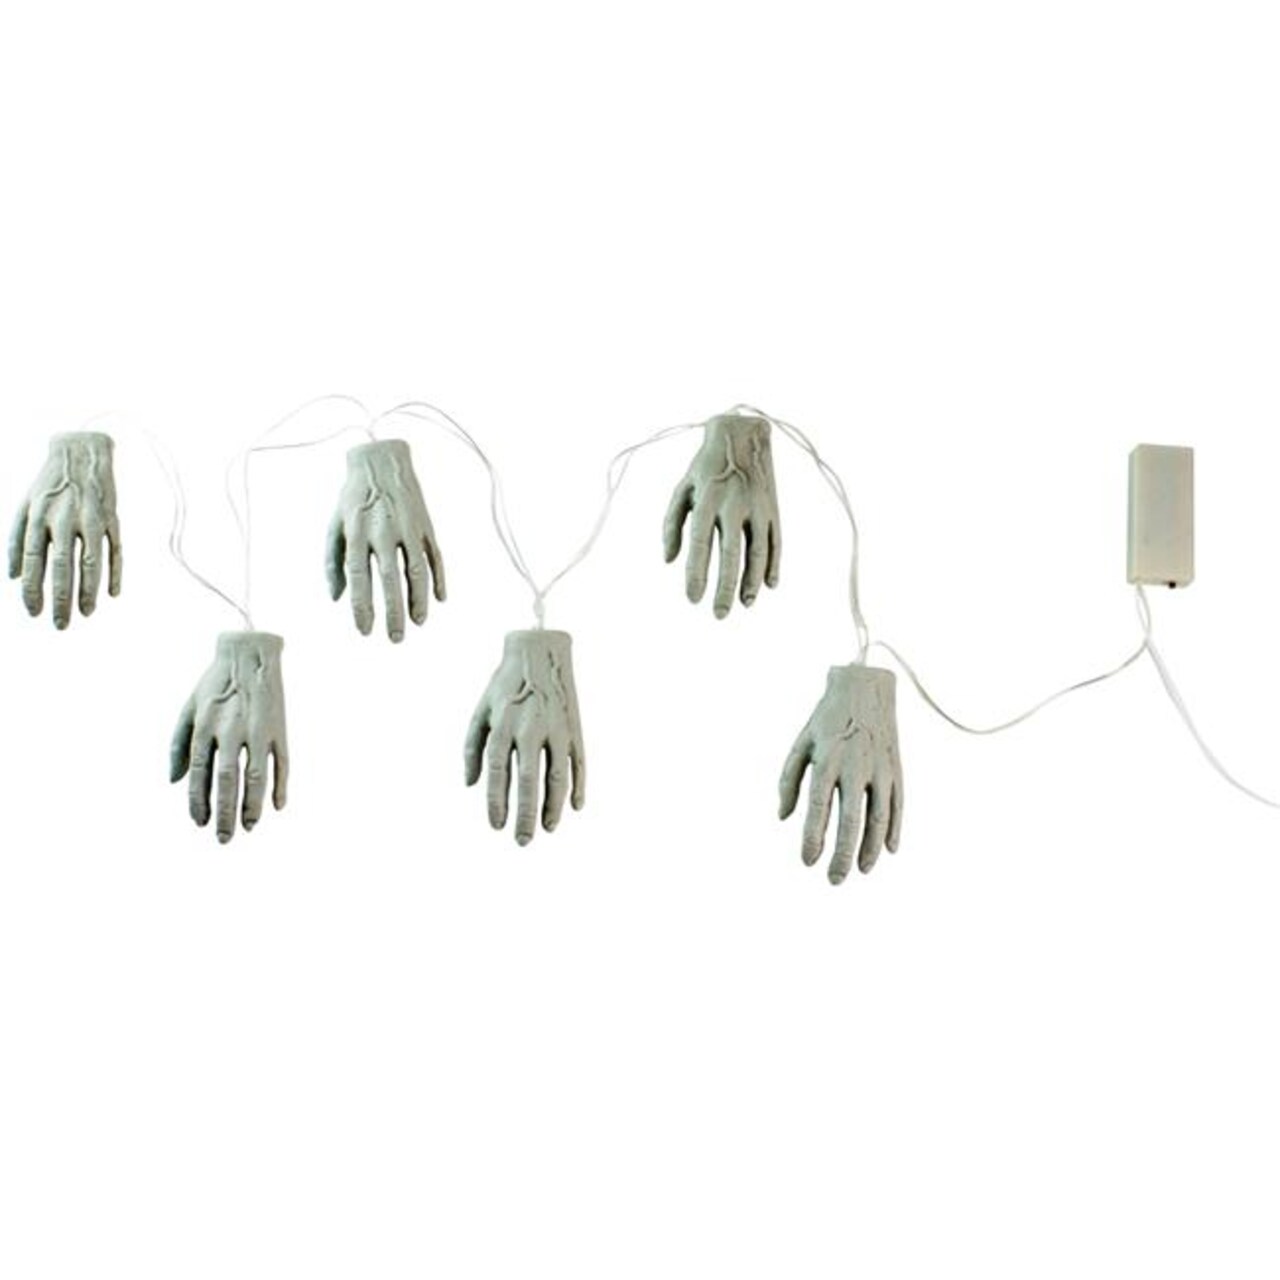 Northlight 34855028 Skeleton Hands Halloween Light Set - Set of 6